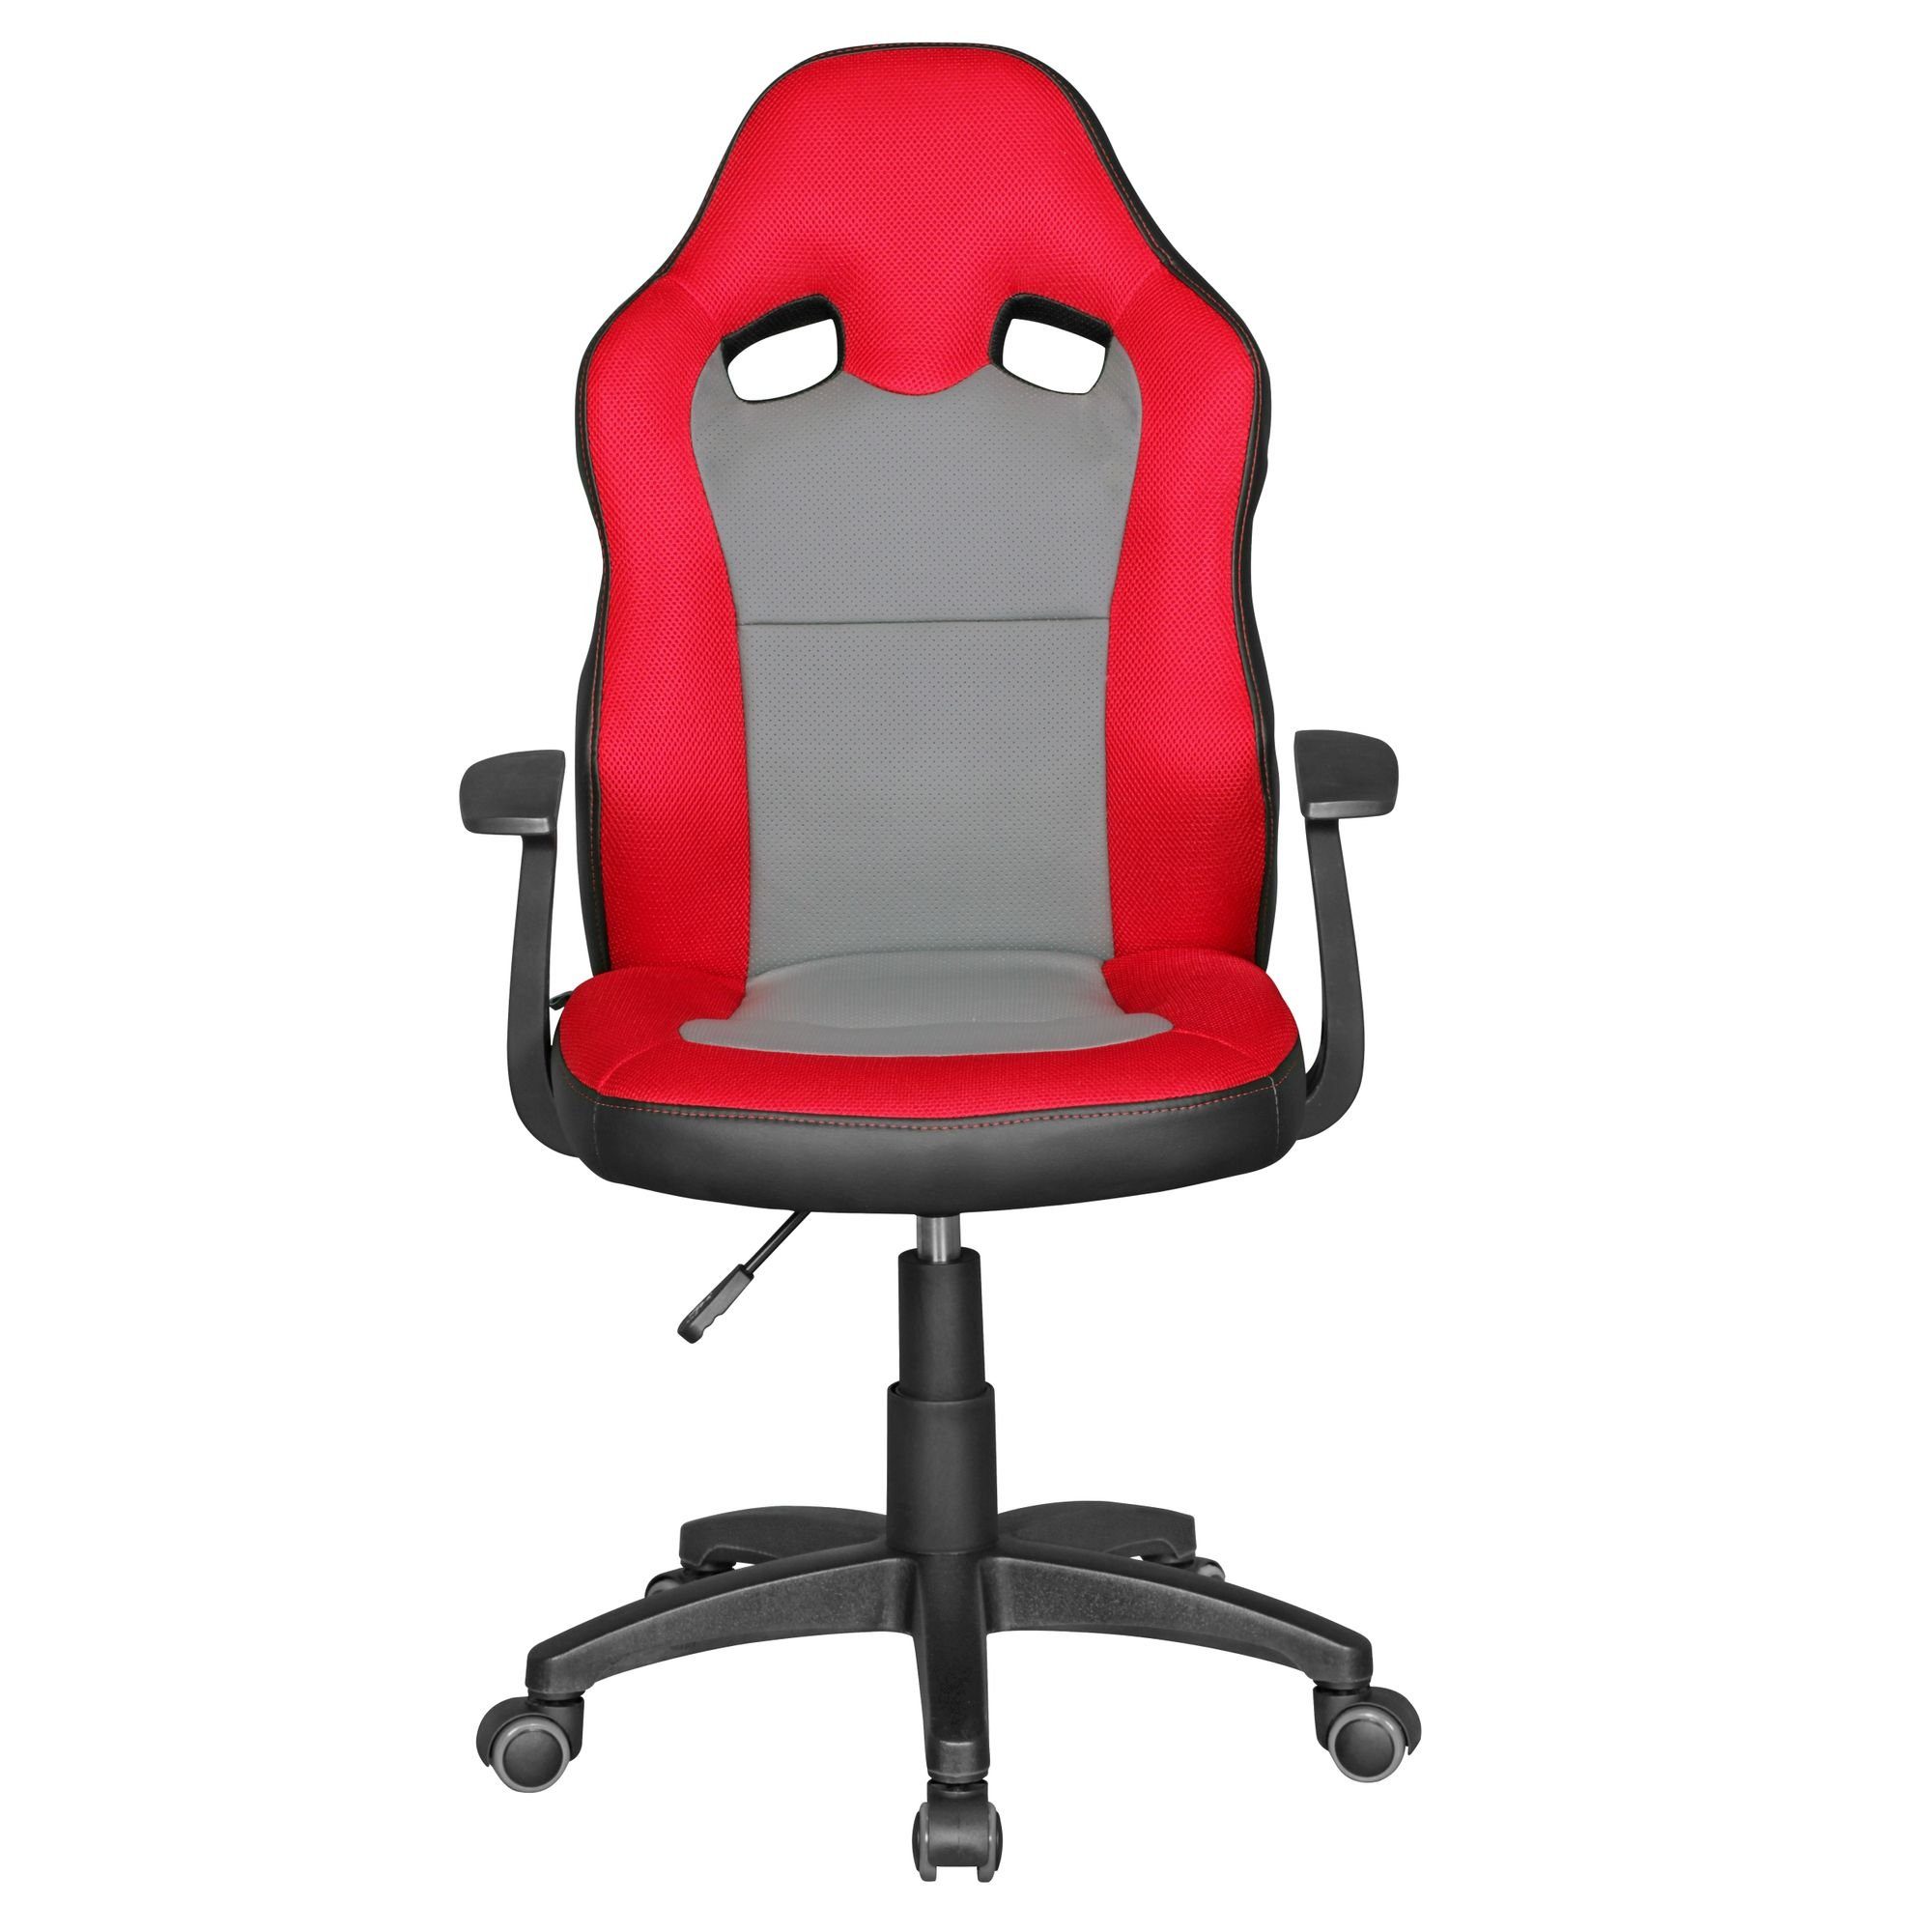 höhenverstellbar, Rot Grau FAST Kinder-Stuhl Ergonomisch, | Rot, KADIMA mit DESIGN Kinderstuhl - Armlehnen